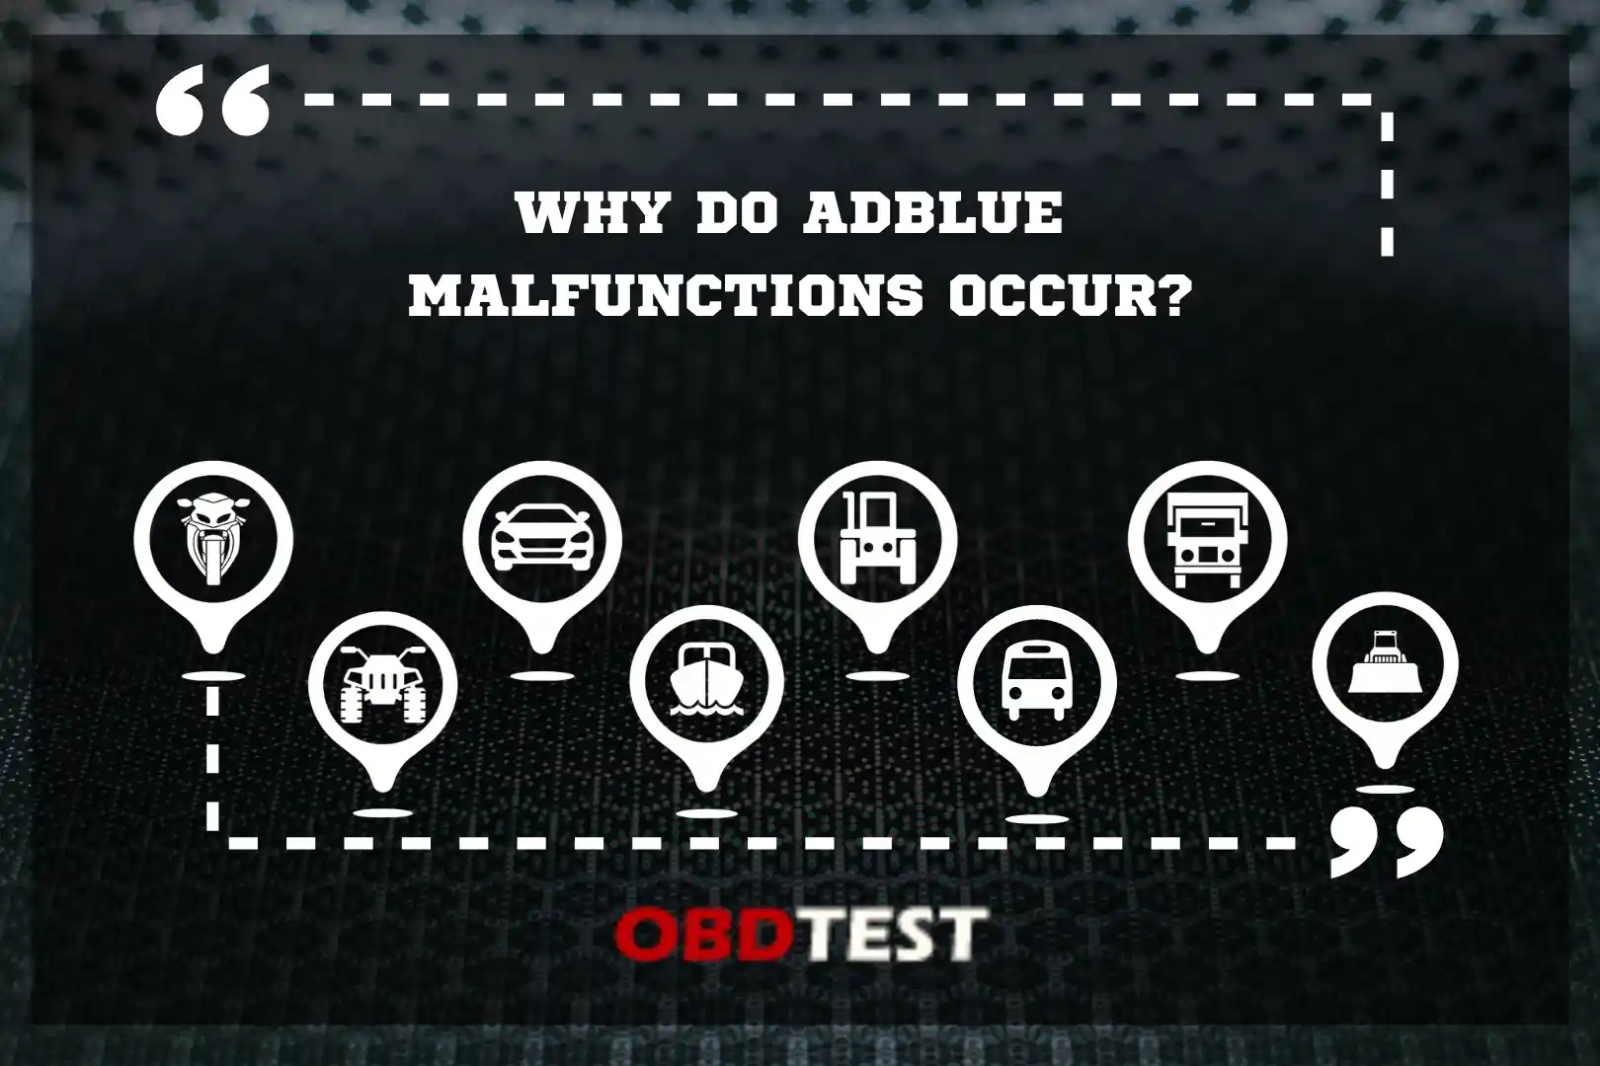 Why do Adblue malfunctions occur?